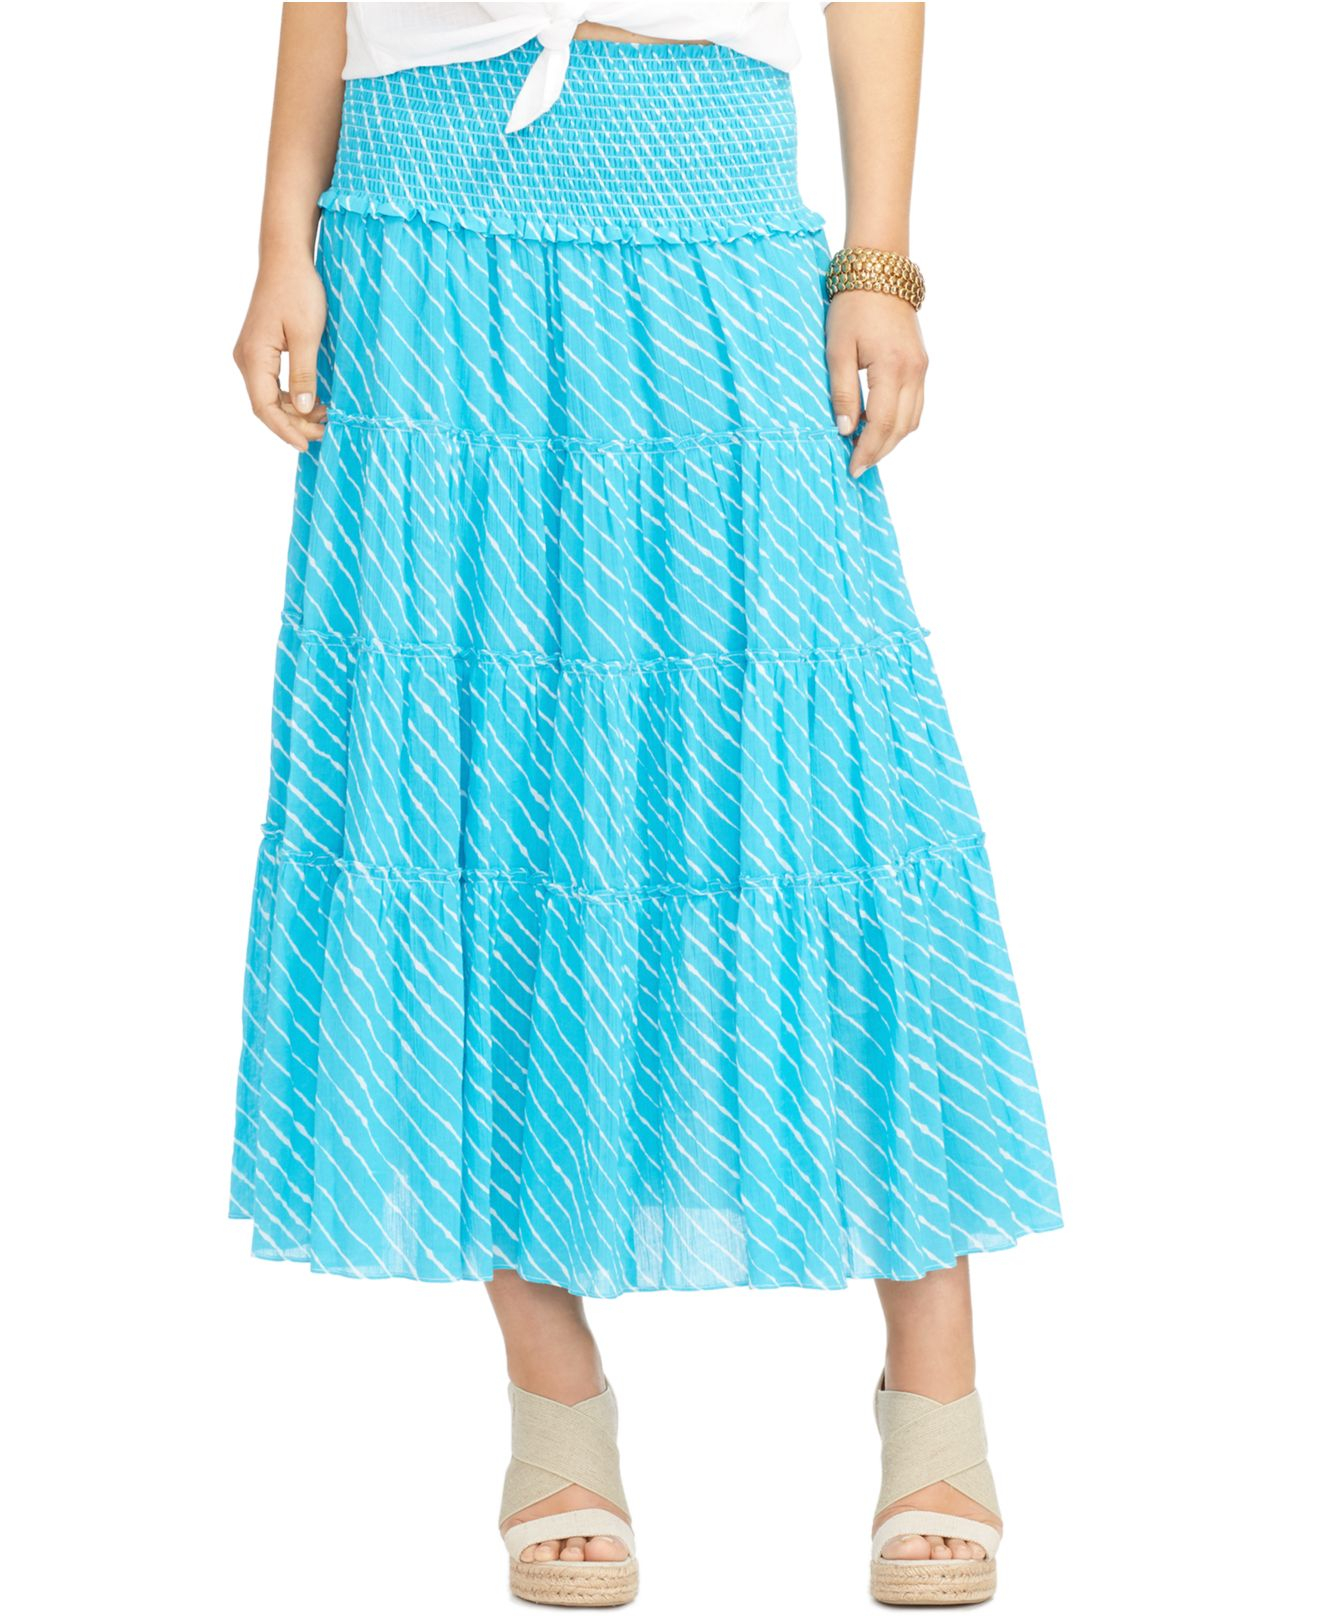 Lauren by ralph lauren Tiered Striped Skirt in Blue | Lyst